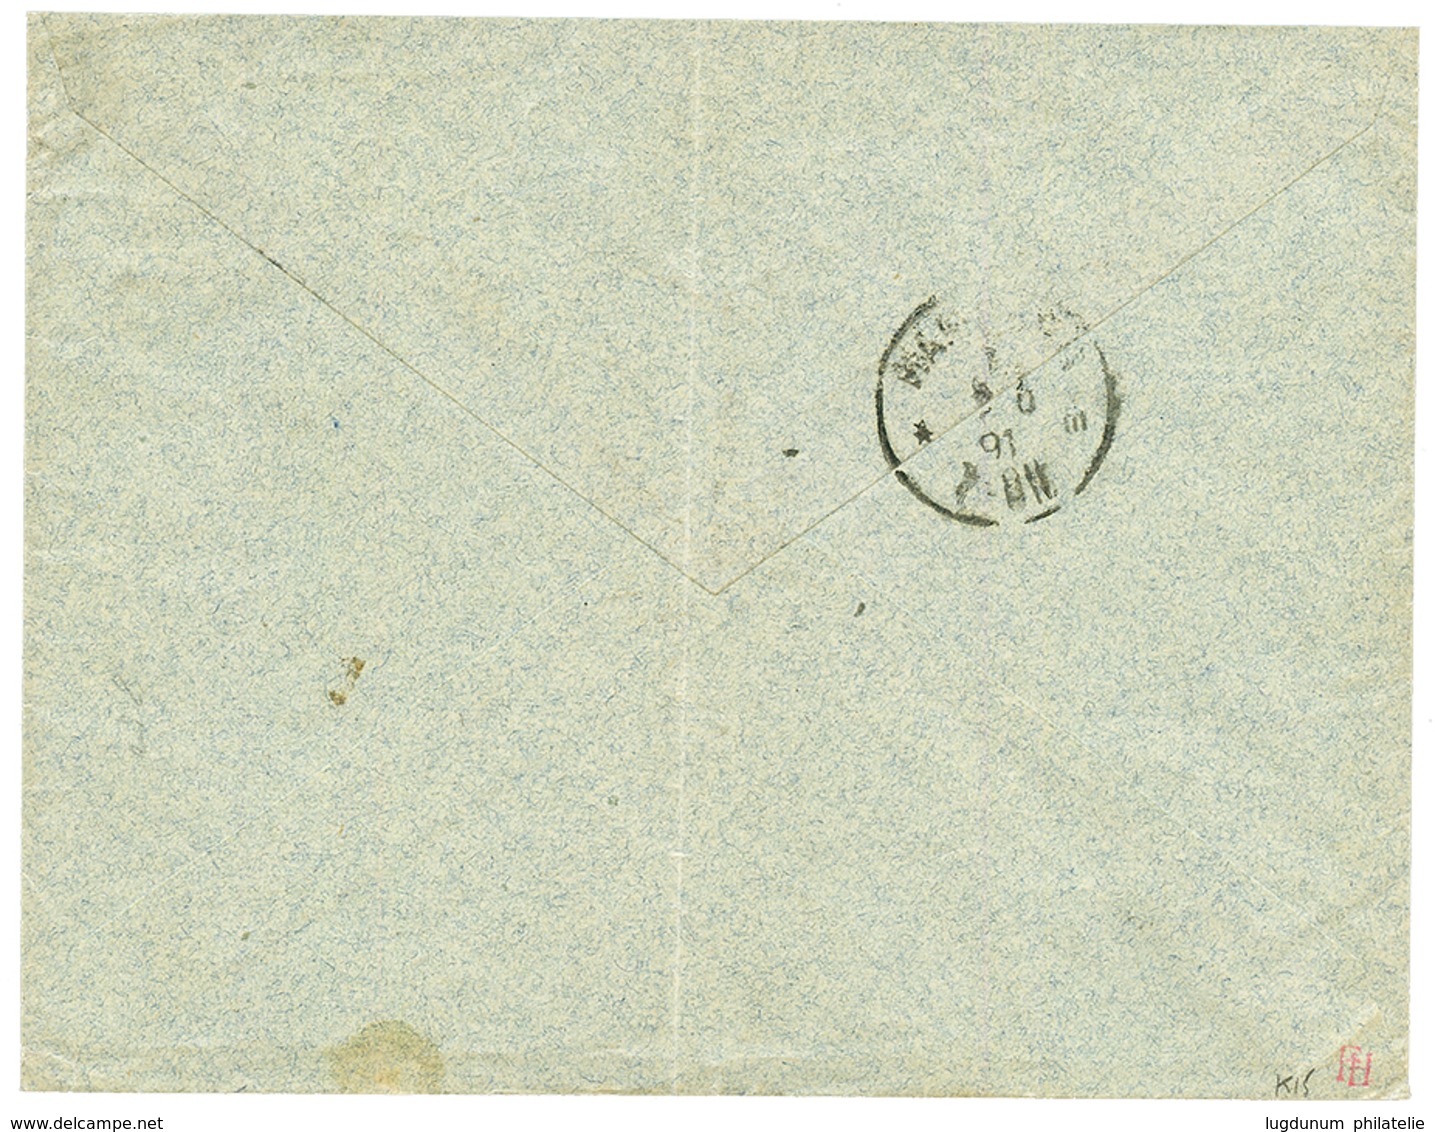 TOGO : 1891 GERMANY 20pf (x2) Canc. AUS WESTAFRIKA + "LOME 8/6 91" On Envelope To HAMBURG. Vvf. - Togo